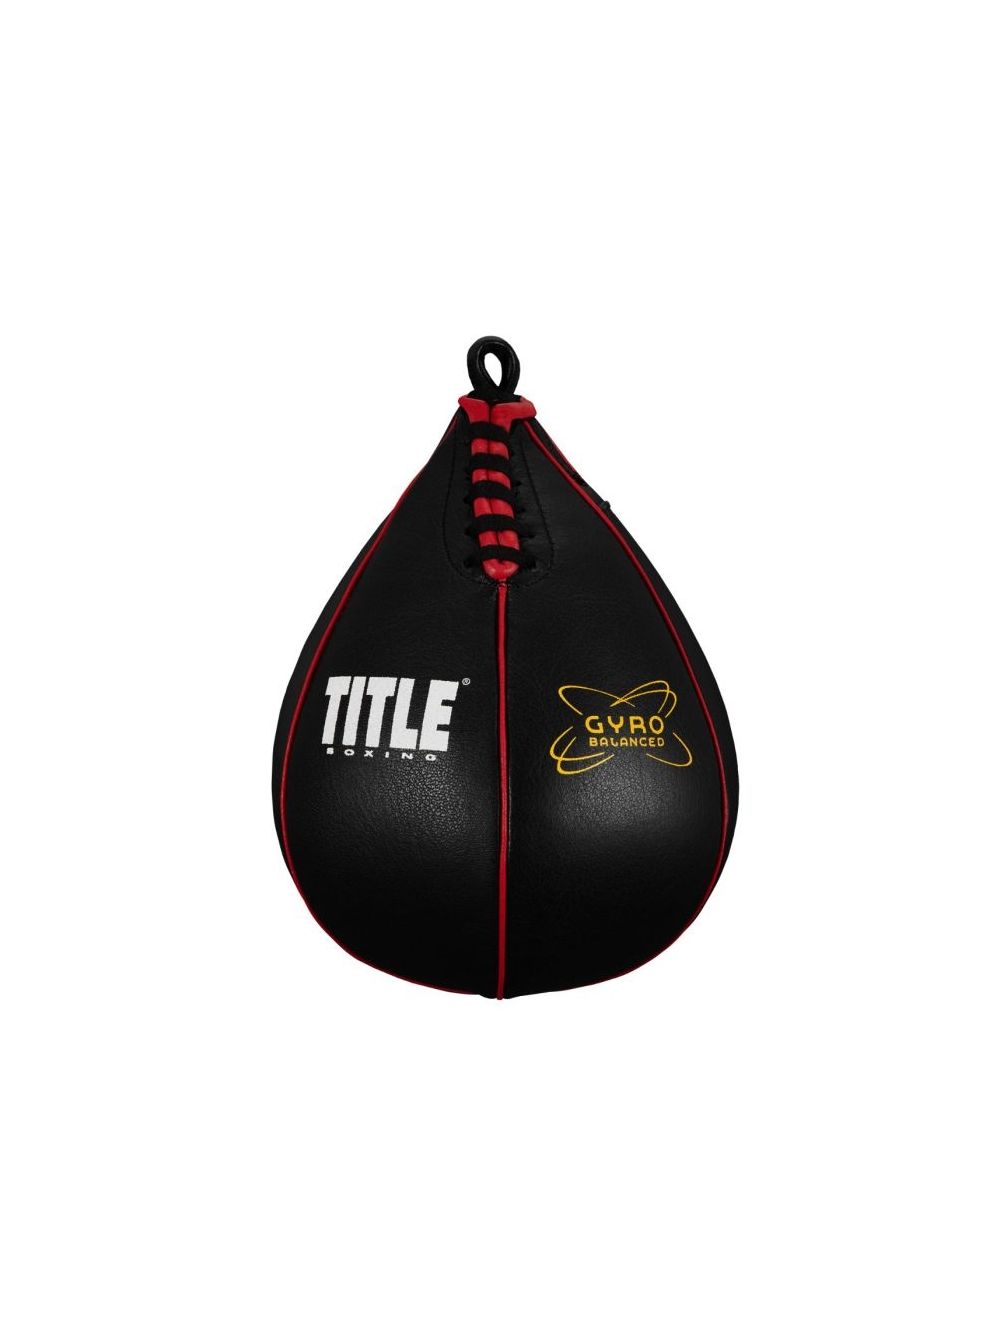 Title Boxing Gyro Balanced Leather Punch Training Speed Bag Black 